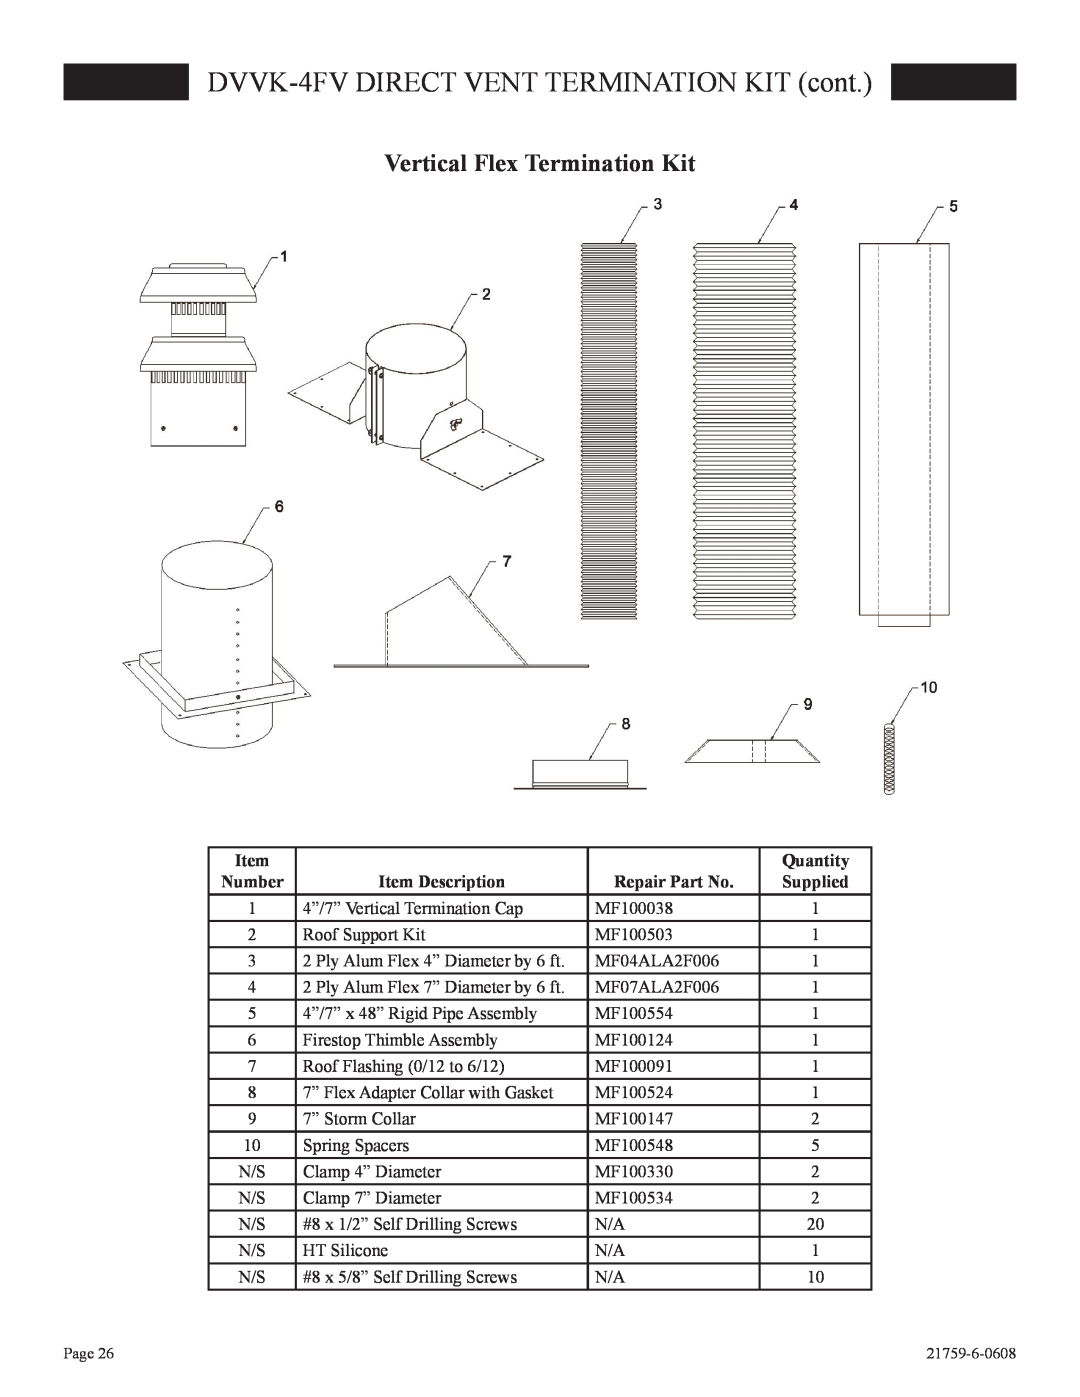 Empire Comfort Systems P)-2 Vertical Flex Termination Kit, DVVK-4FVDIRECT VENT TERMINATION KIT cont, Item, Quantity 